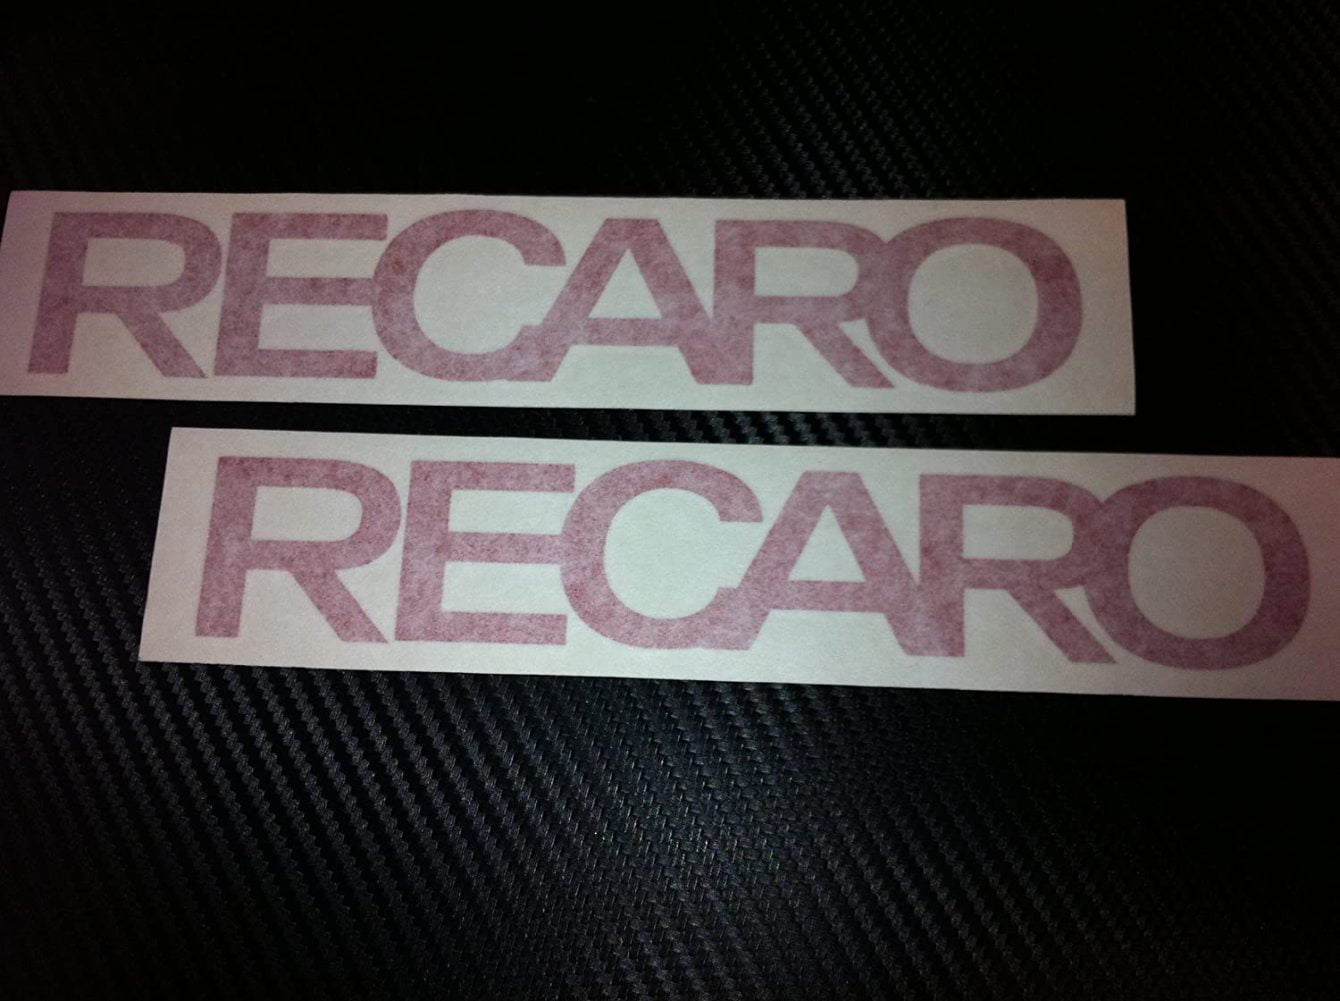 1 X Recaro Racing Decal Sticker New Black Size 8x1.4 